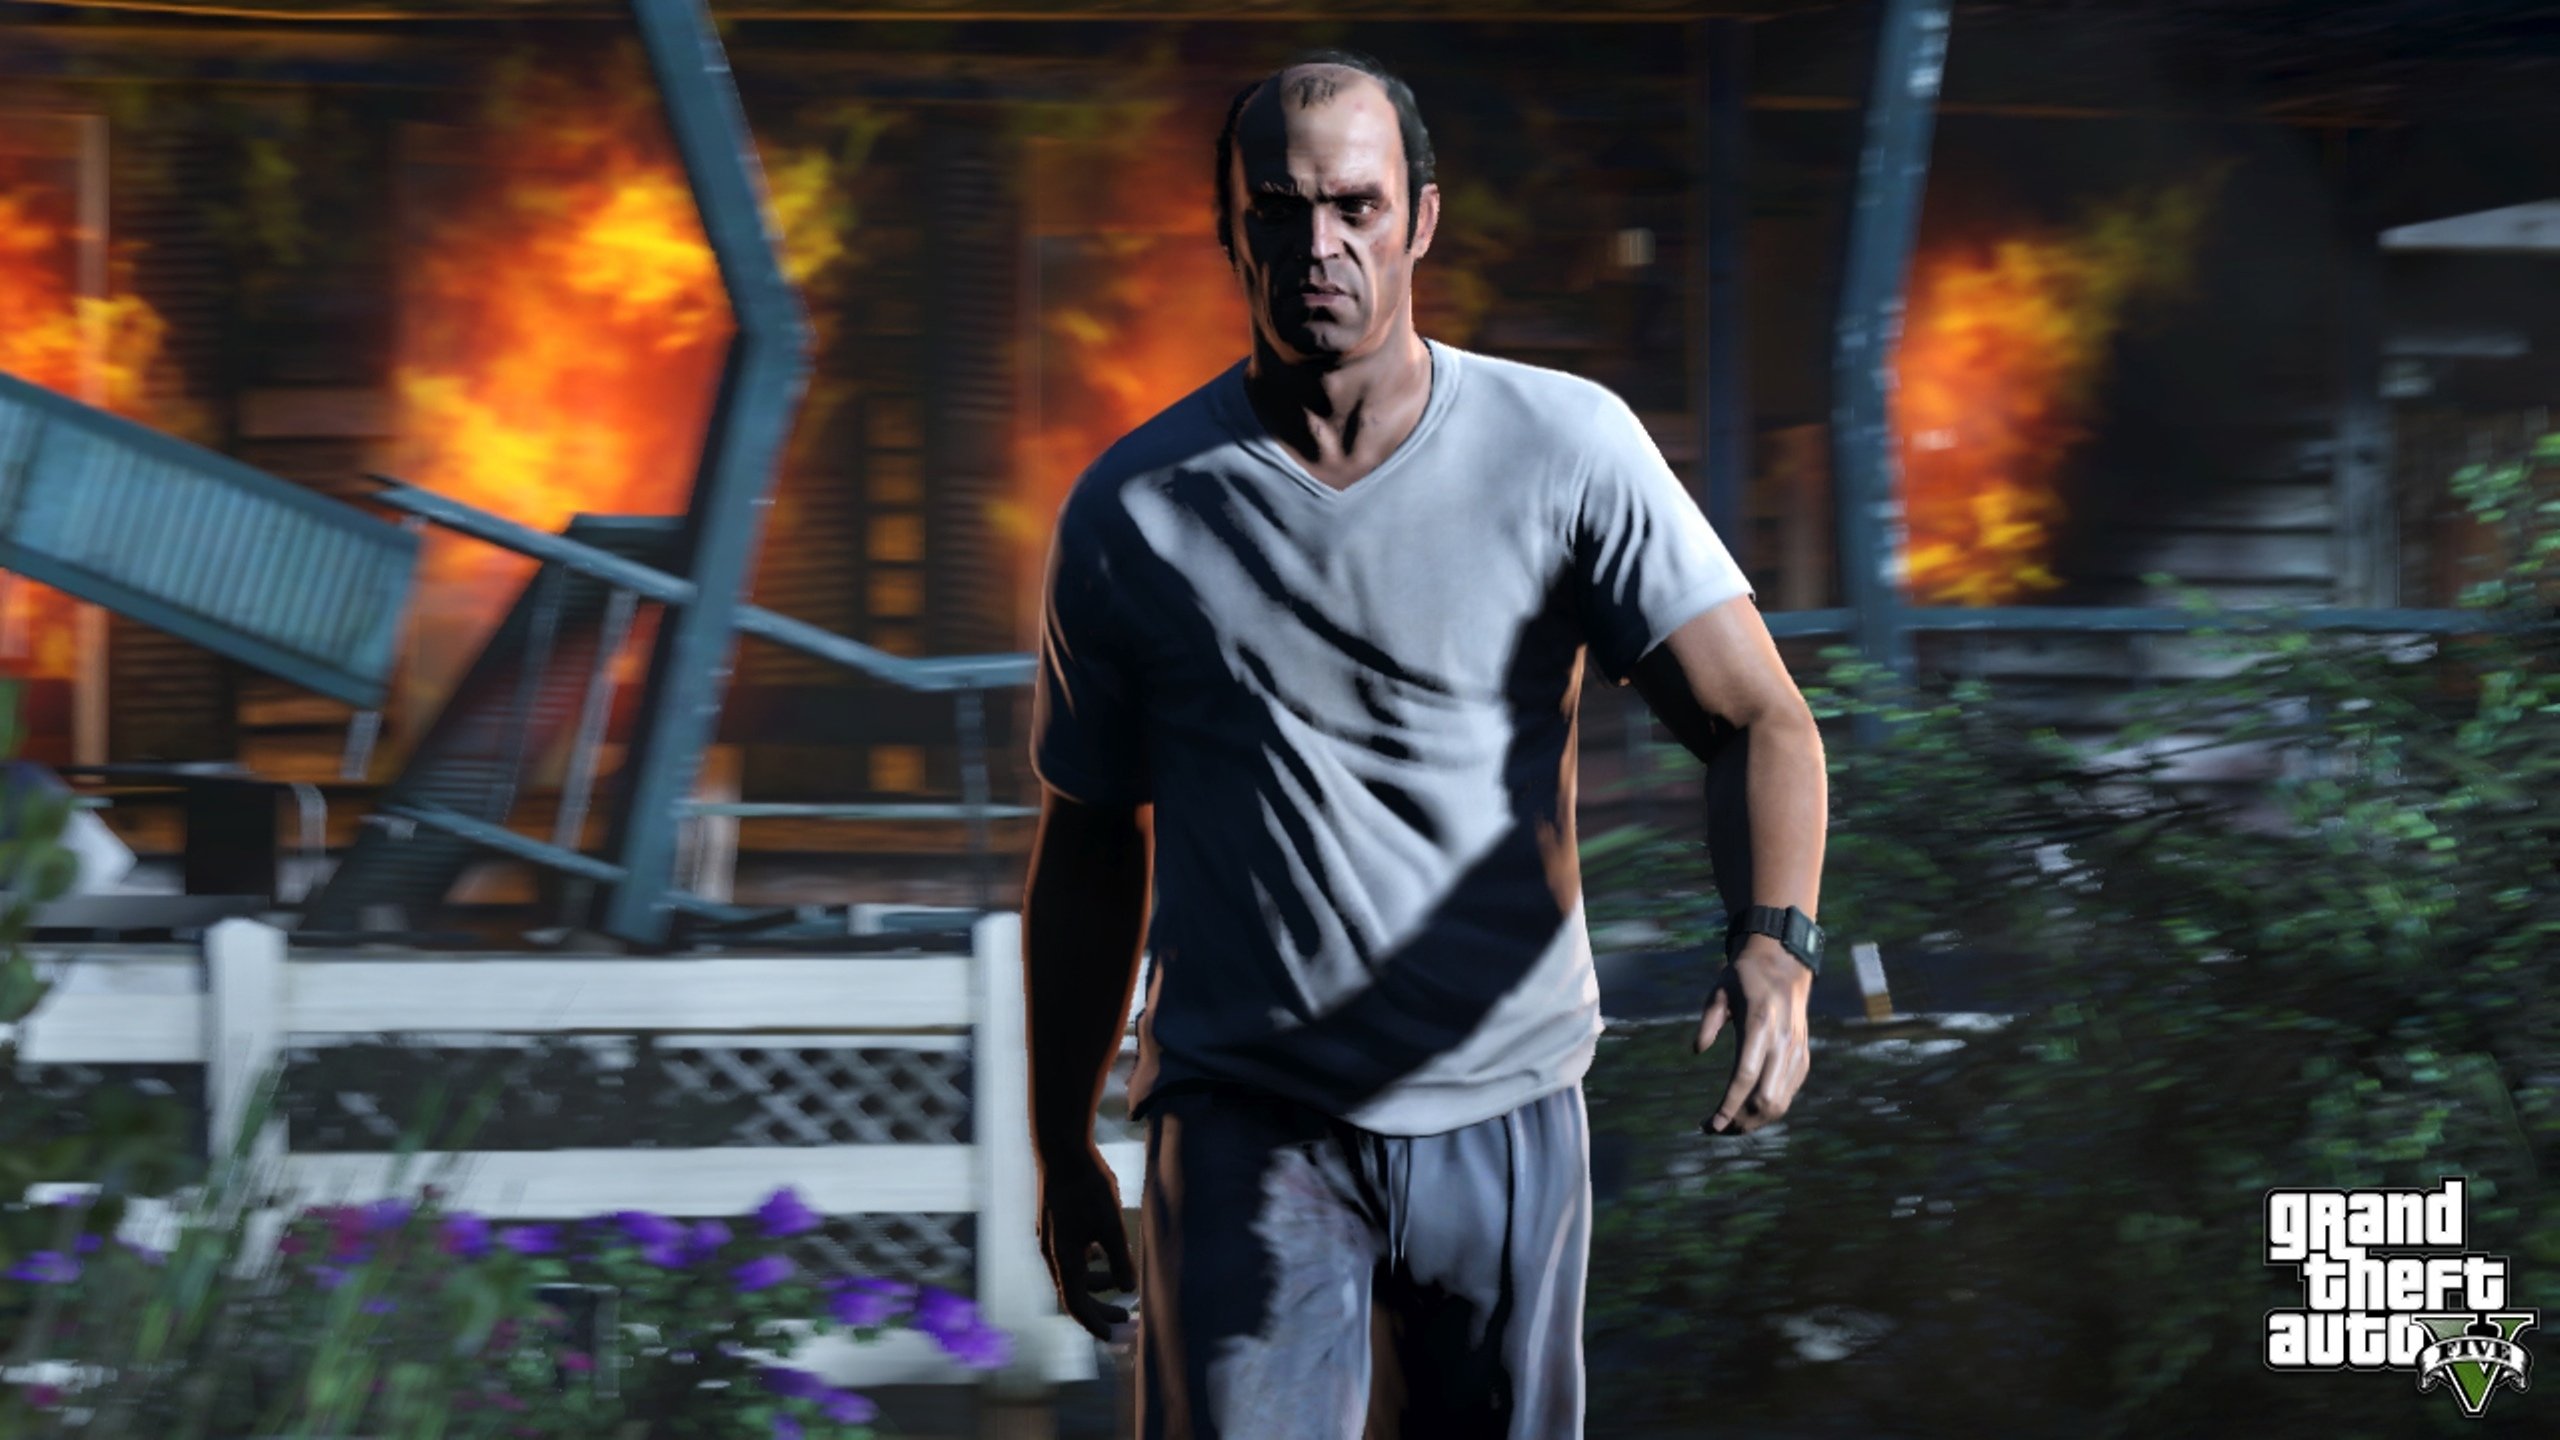 Grand Theft Auto V Action Adventure Rockstar Violence Crime Gta 1gta5